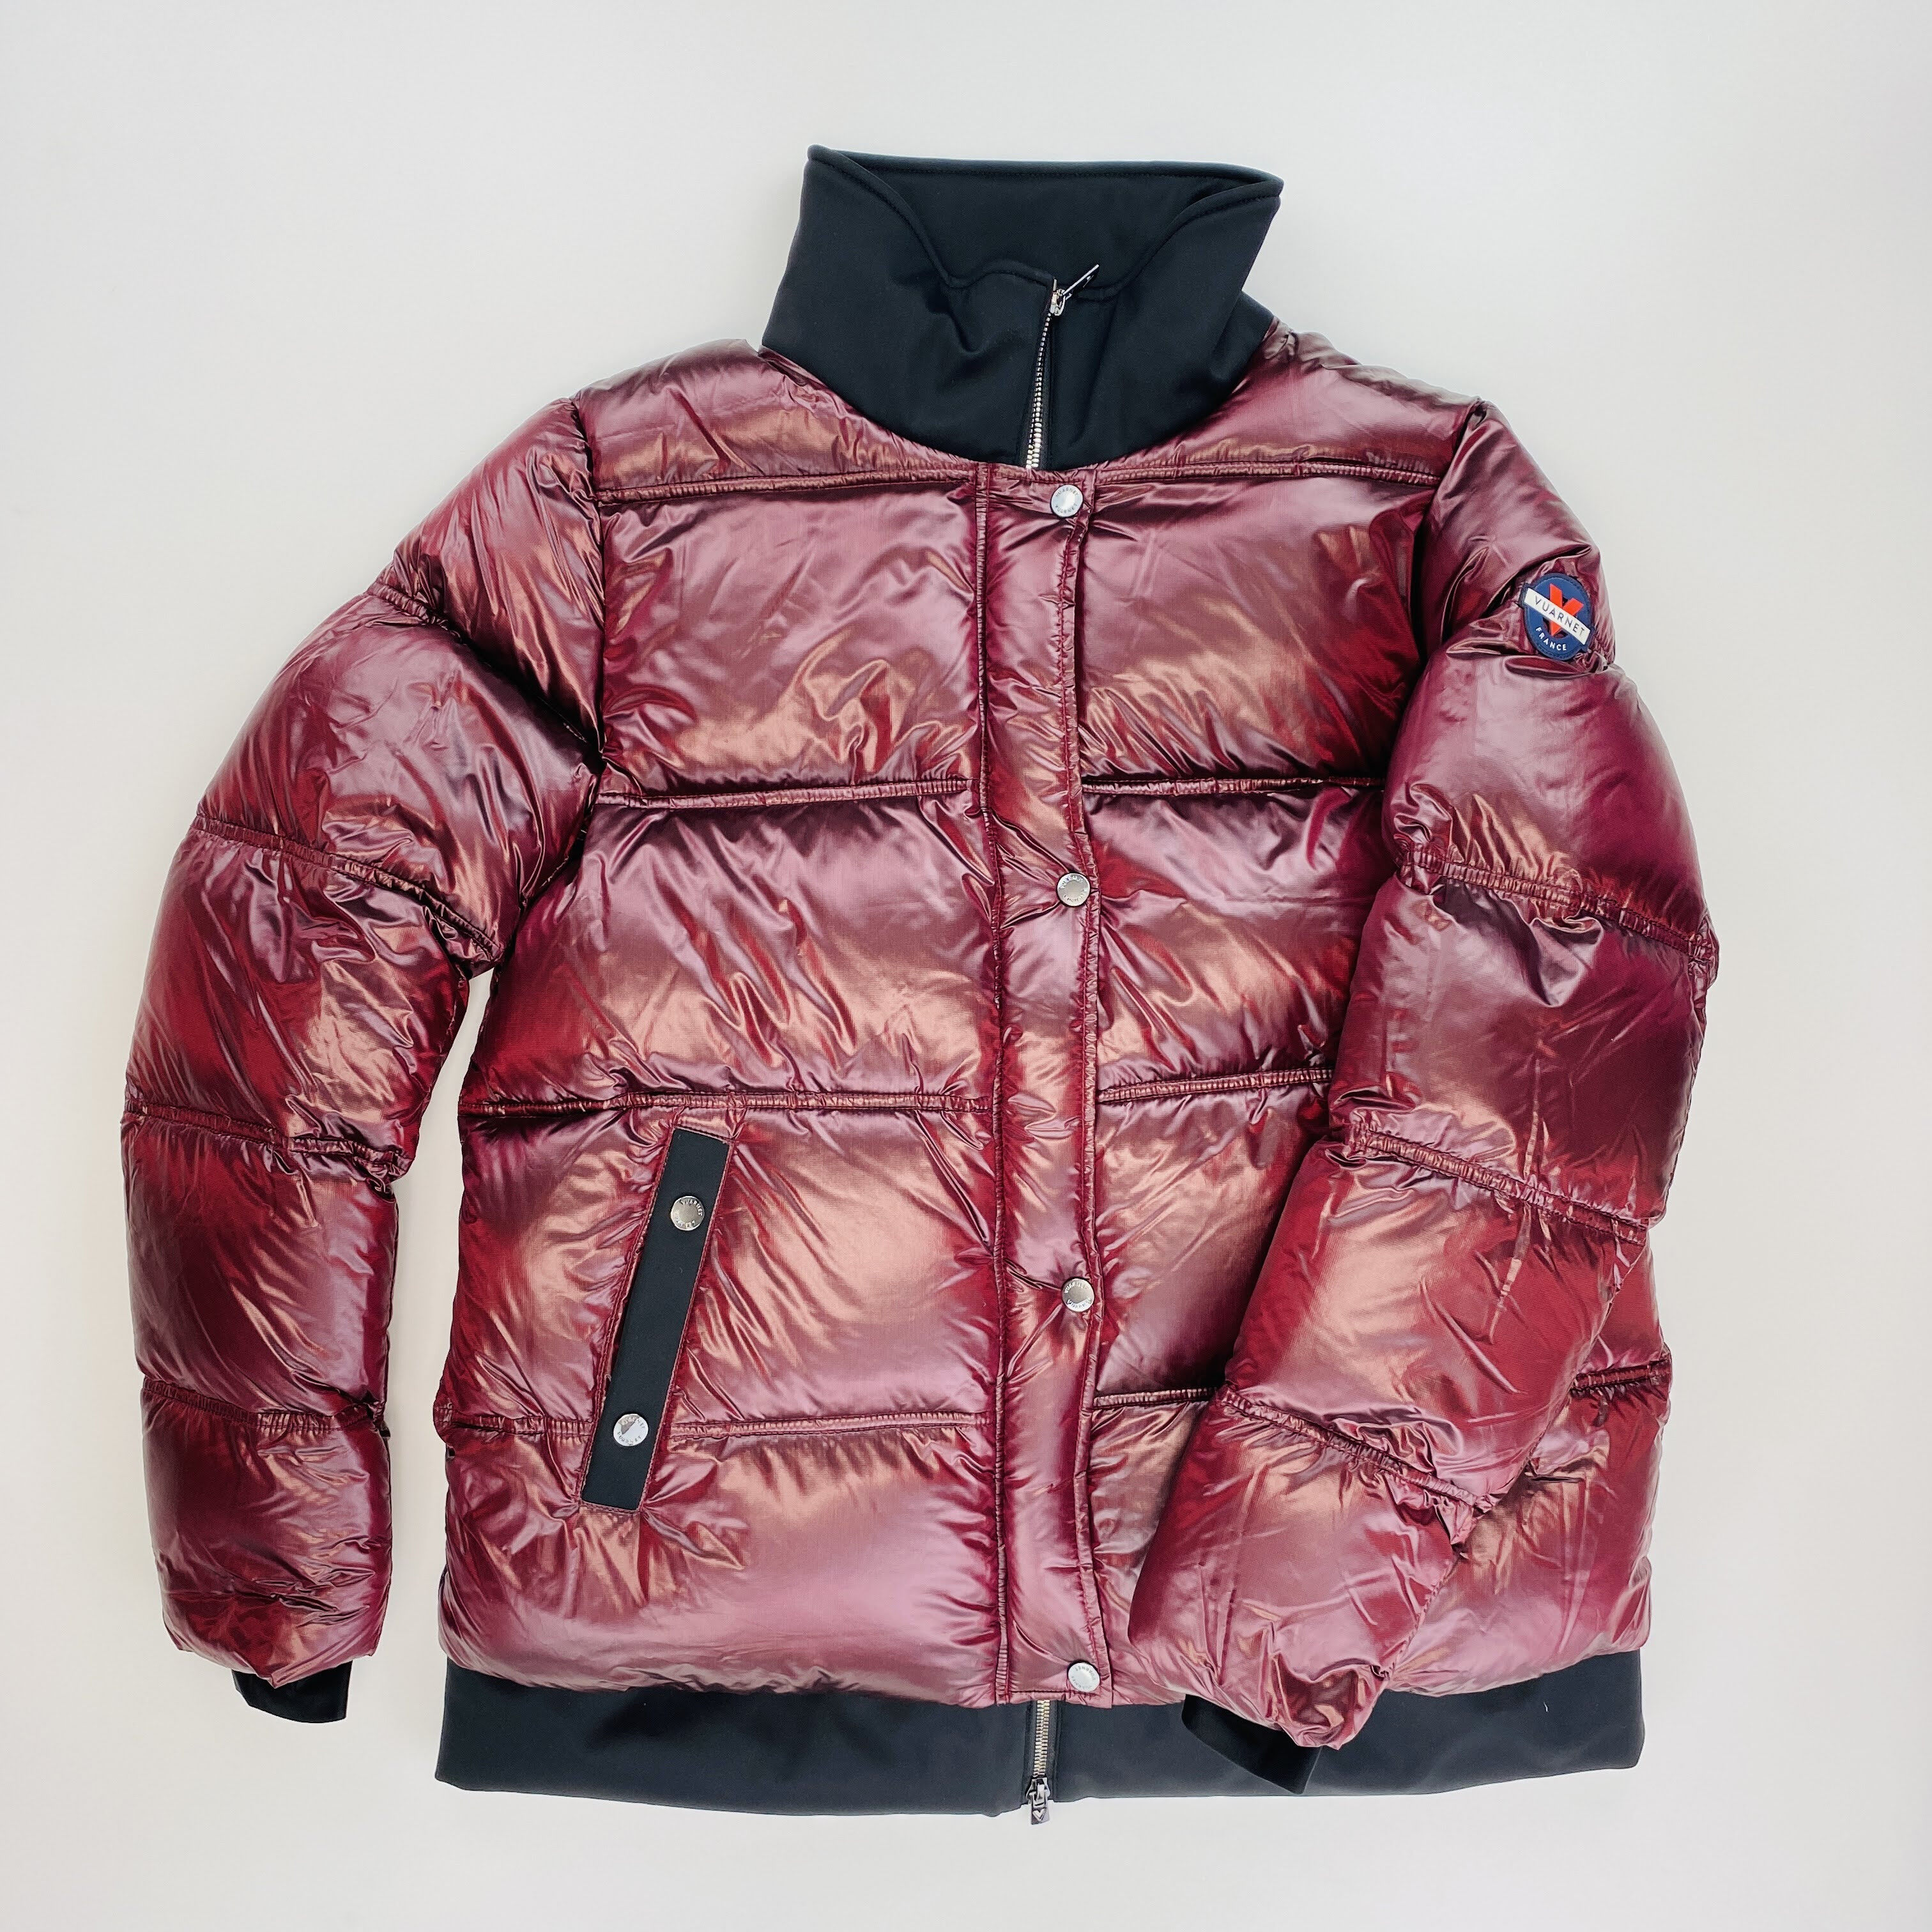 Vuarnet Loira Jacket - Second Hand Synthetic jacket - Women's - Red - S ...